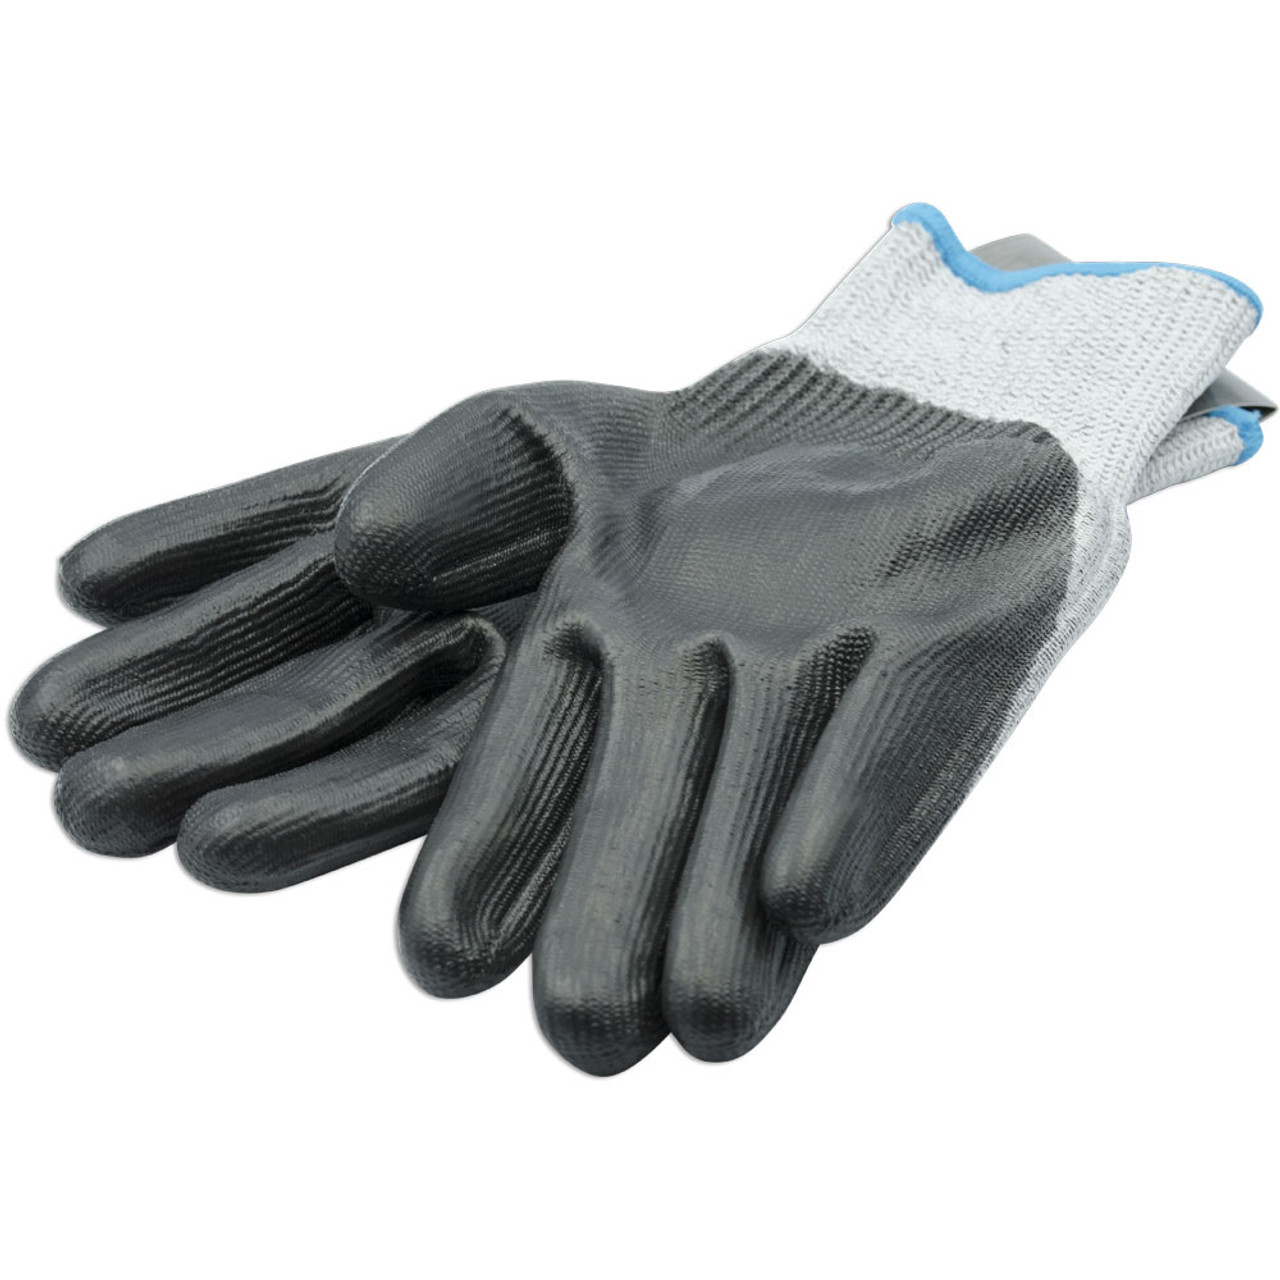 Spearfishing Gorilla Gloves Cut Resistant Level 5